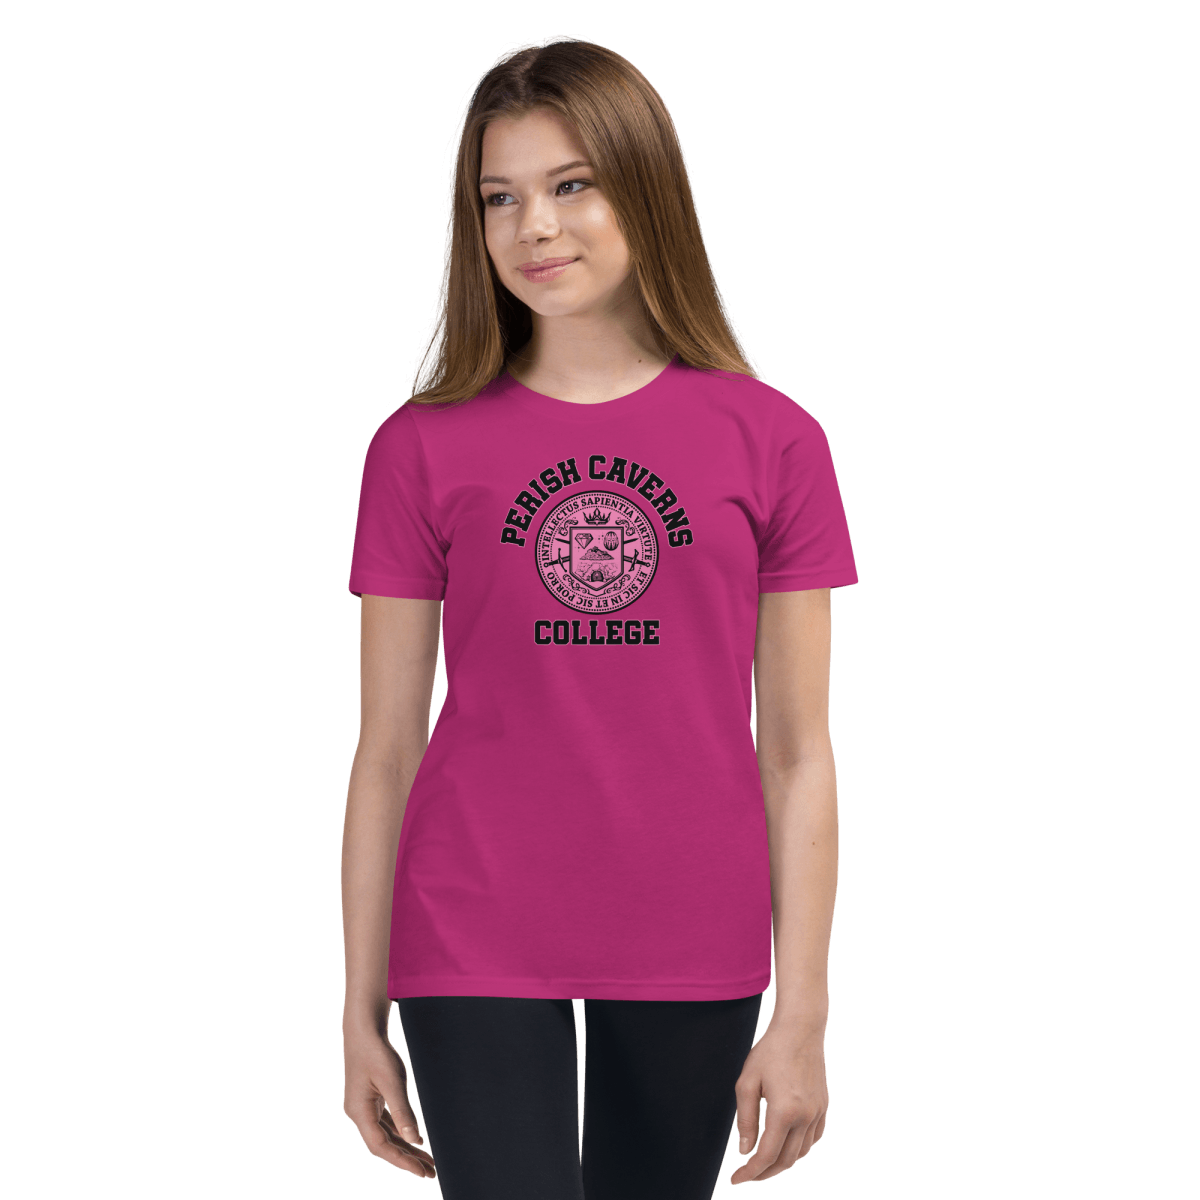 Perish Caverns College Crest Youth T-shirt - RG Halleck